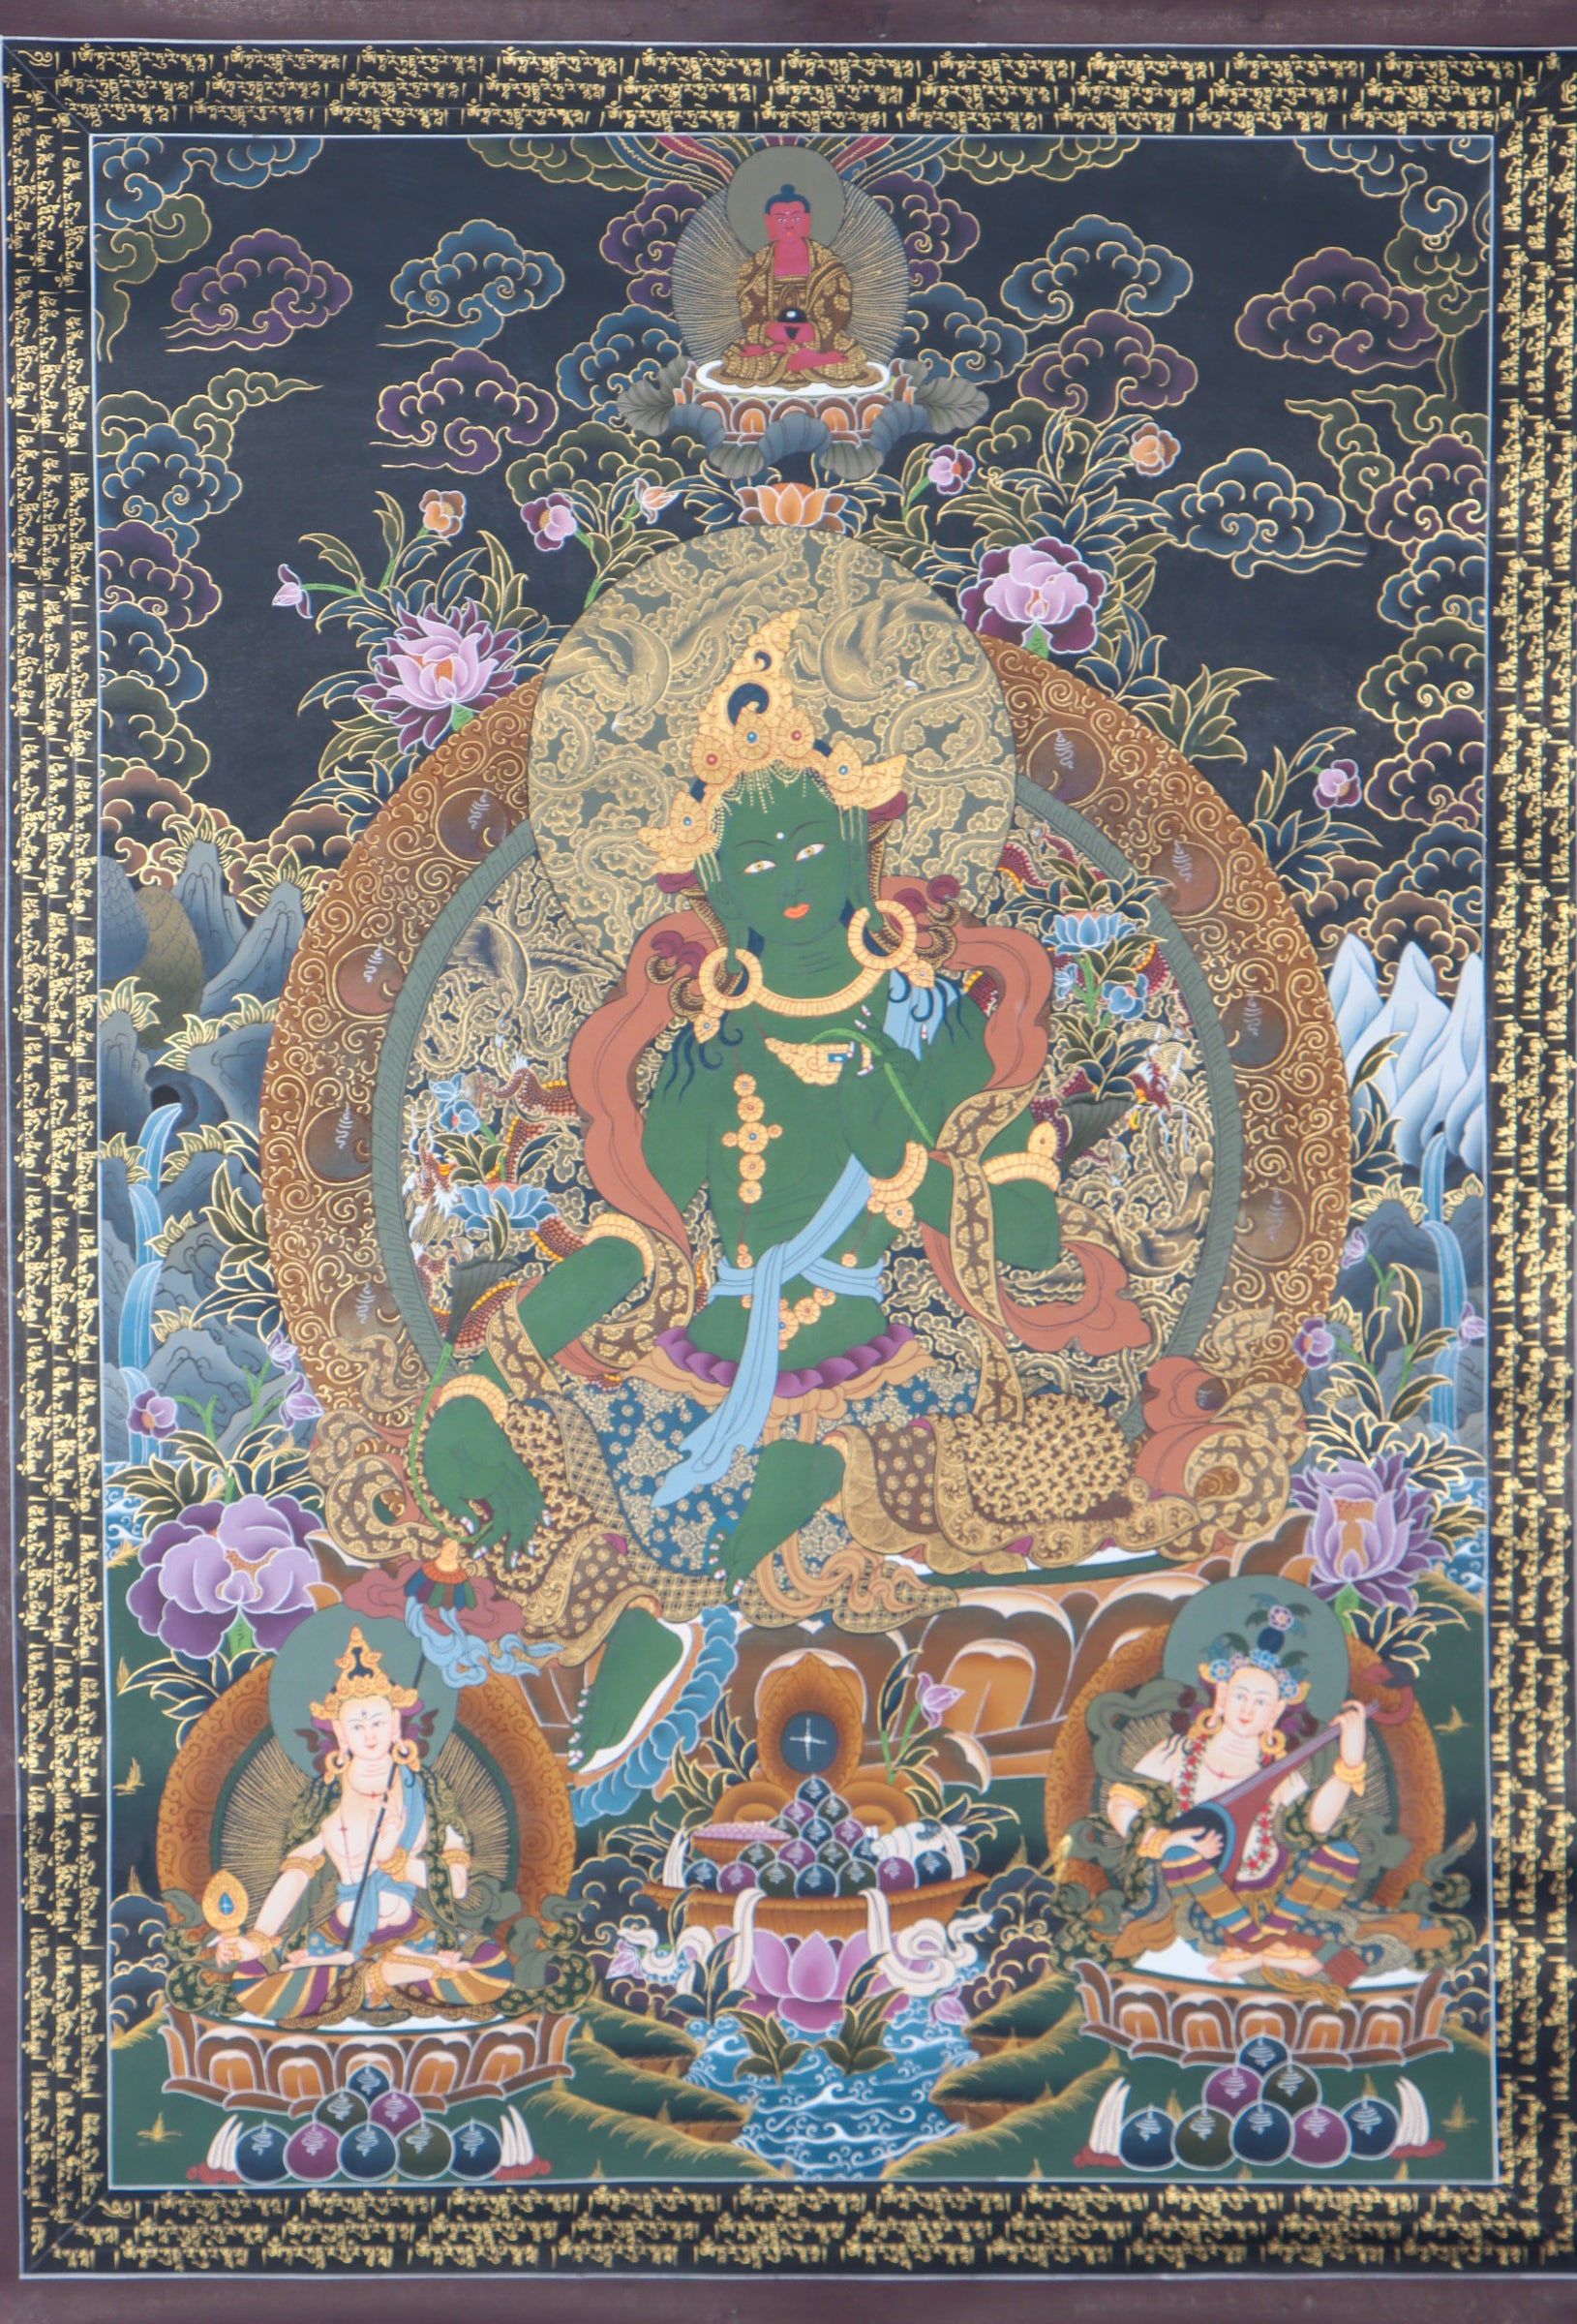  Green Tara Thangka for wisdom and enlightment.